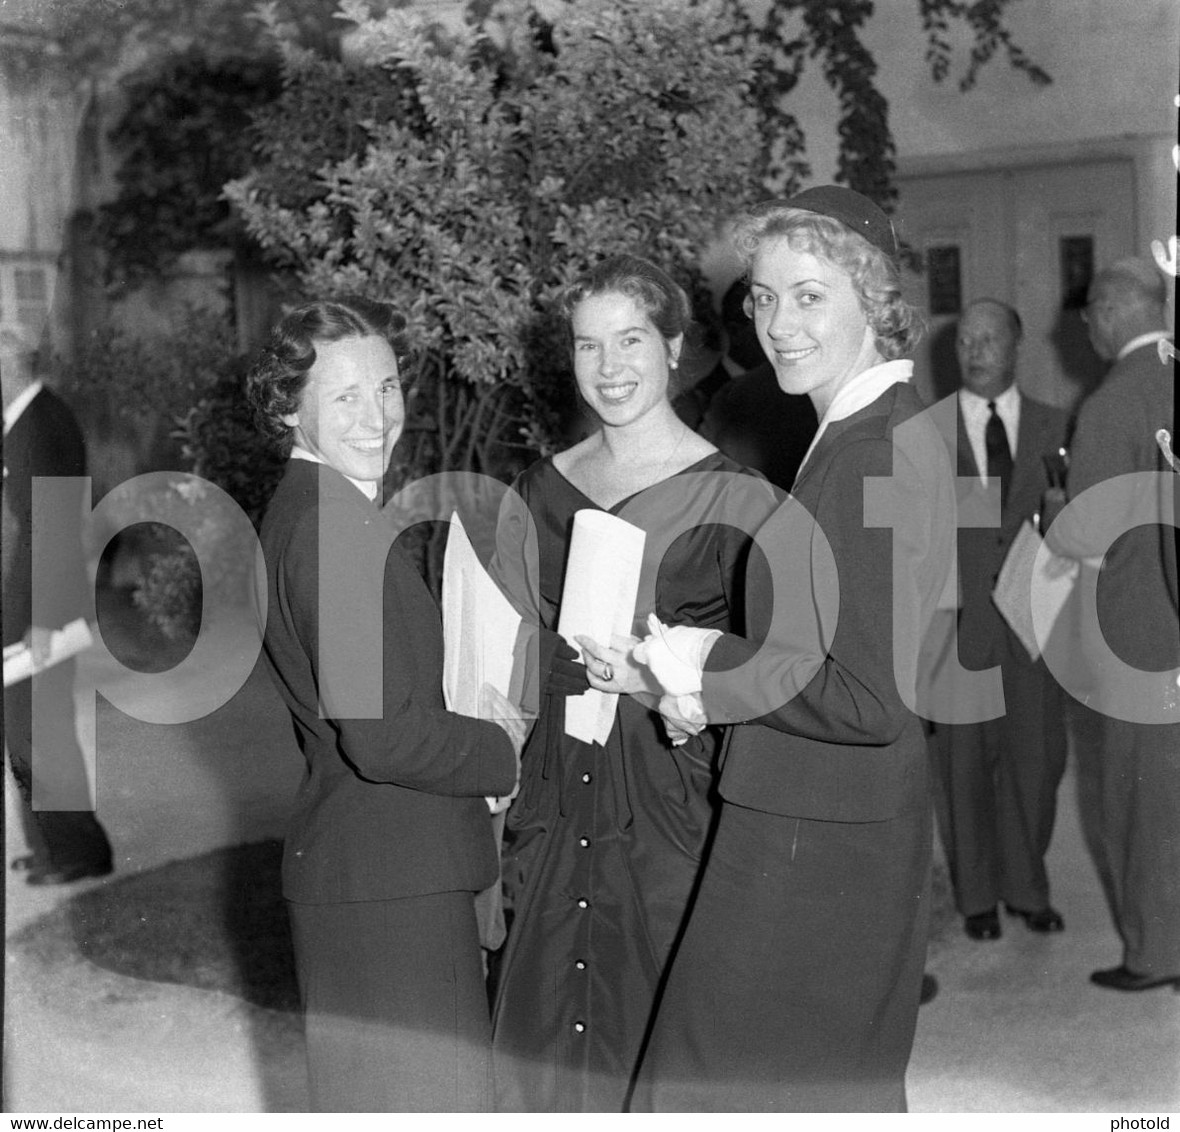 DEUTSCHE LUFTHANSA PARTY  OCTOBER 1957 LISBON PORTUGAL SET ORIGINAL 60mm NEGATIVE NOT PHOTO FOTO PLANE LCAS196